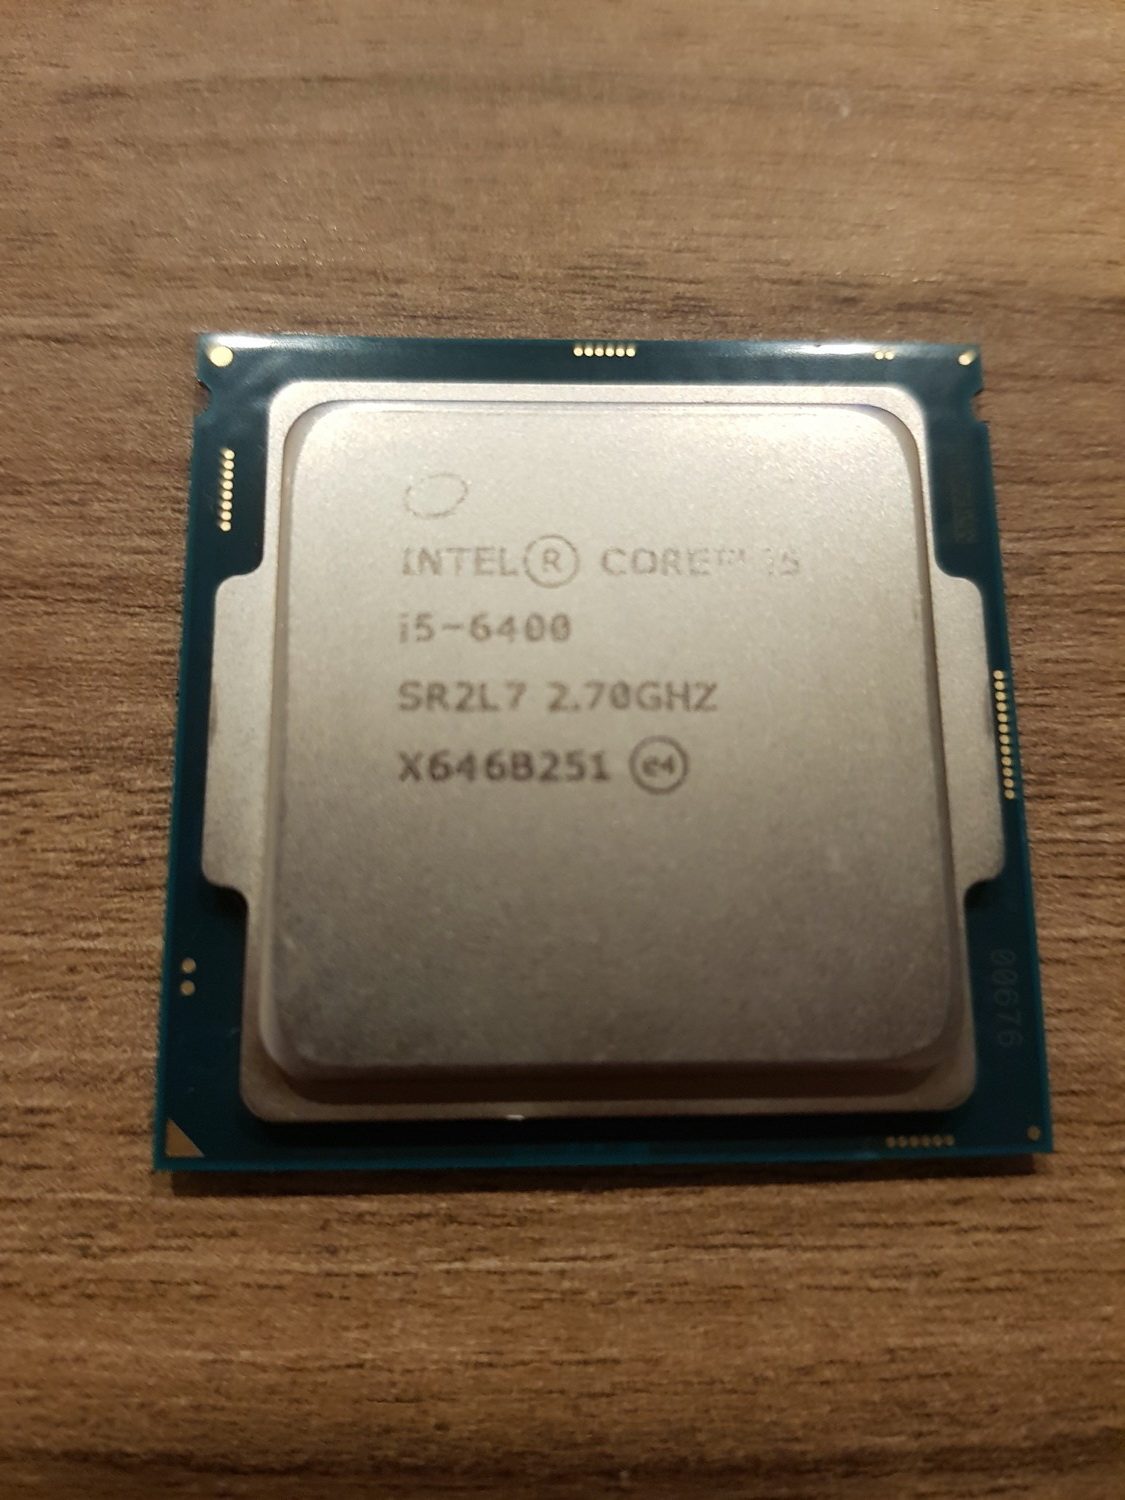 LGA 1151 CPU I5 6400 2.7 GHz. Cores: 4 Threads: 4